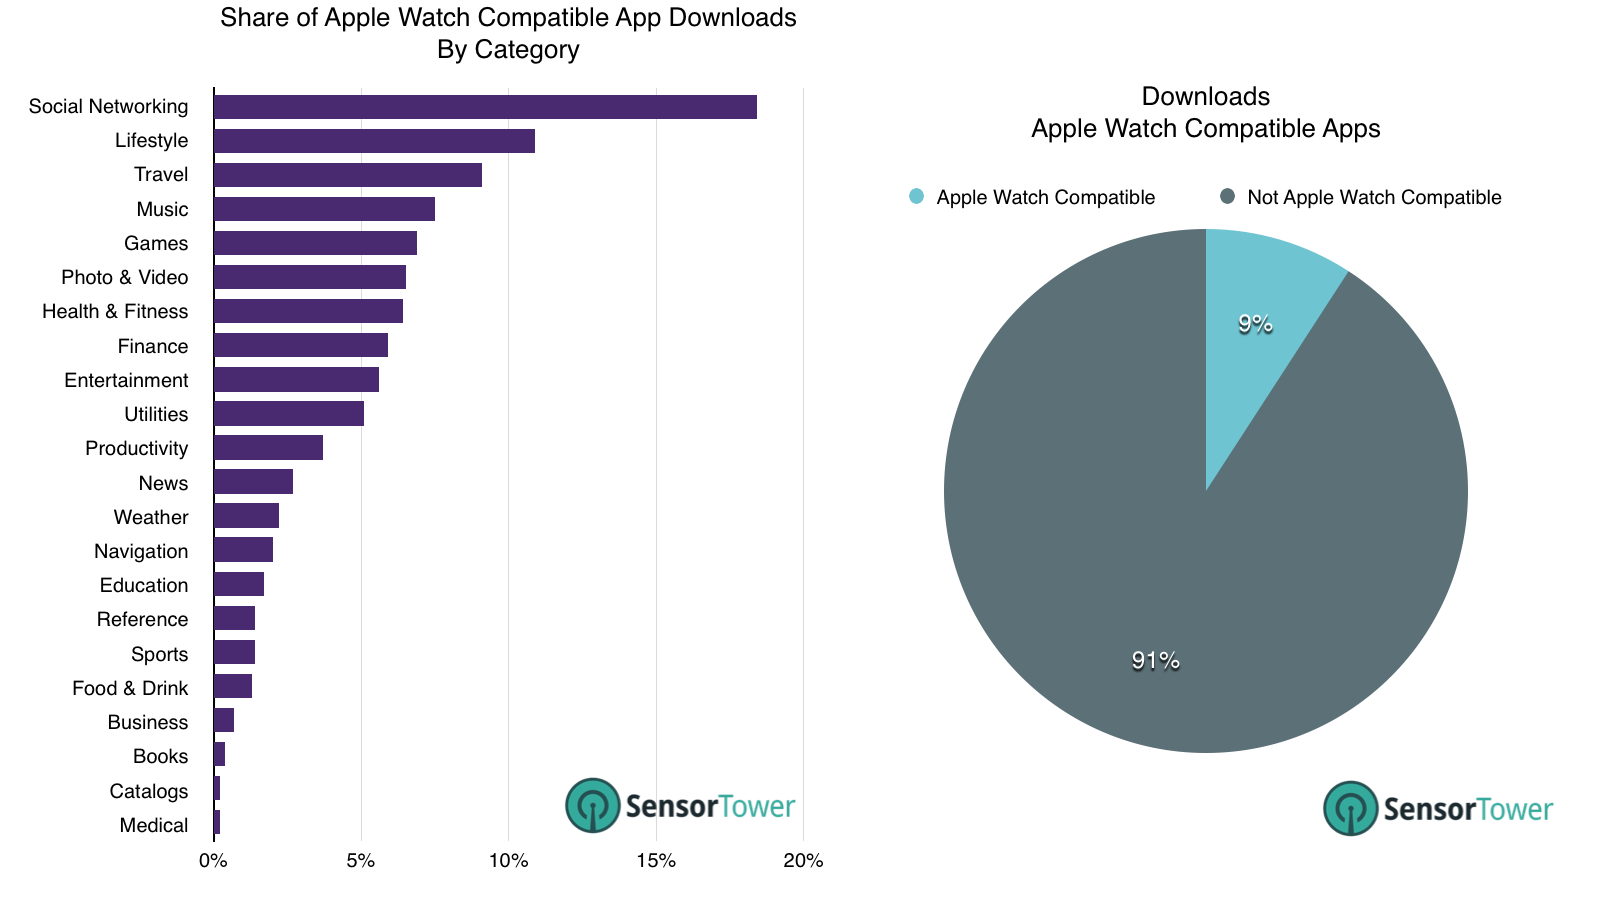 lt="Download Estimates for Apple Watch Compatible Apps